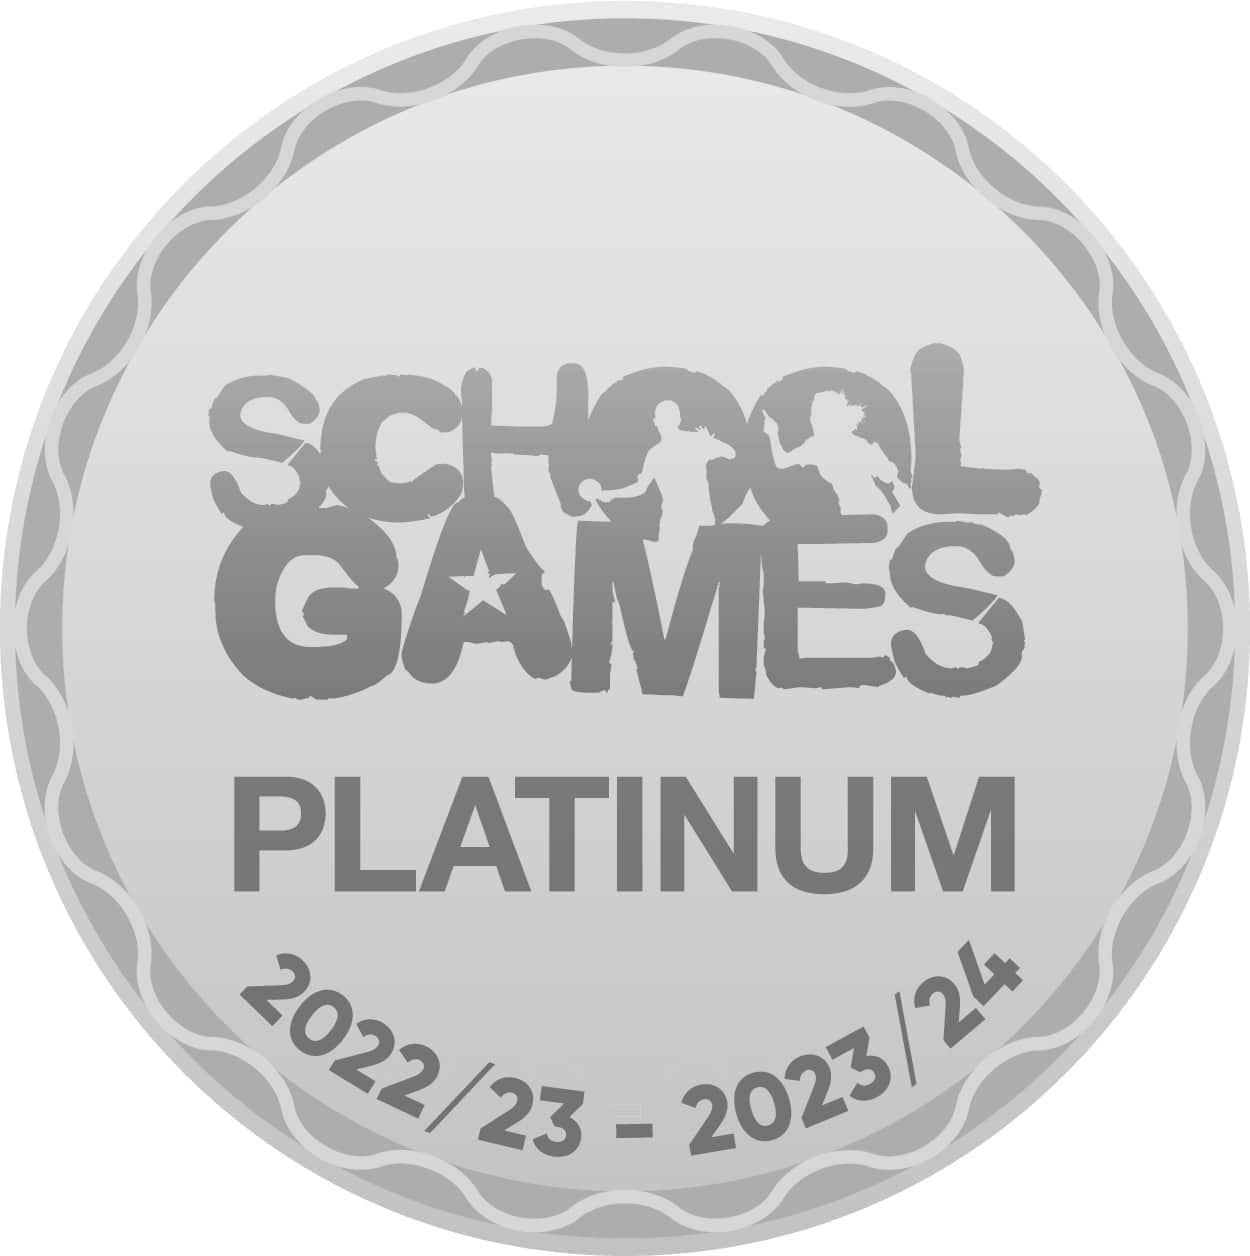 SCHOOL GAMES PLATINUM AWARD